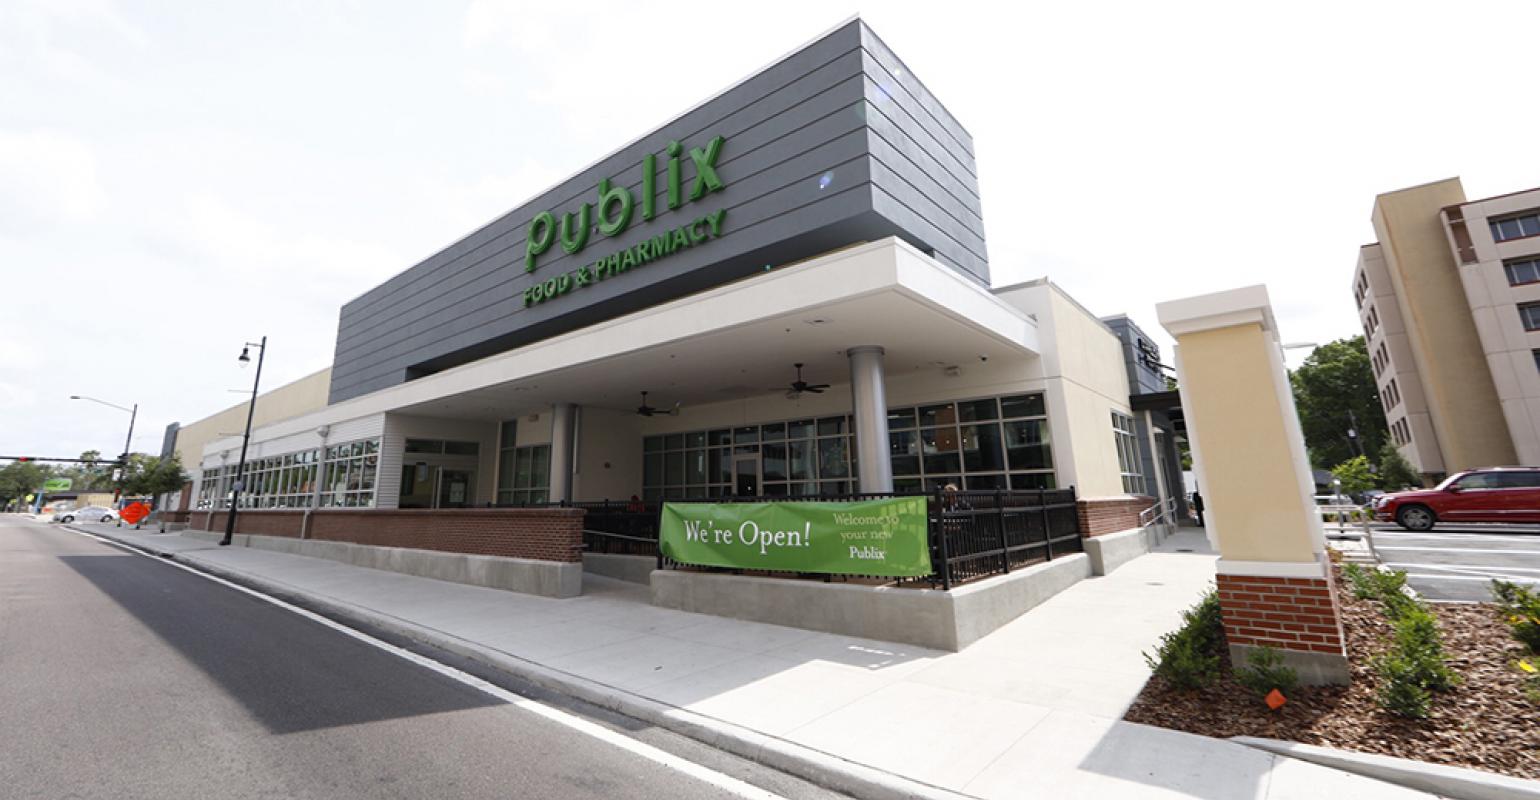 Gallery Publix’s new Gainesville location Supermarket News